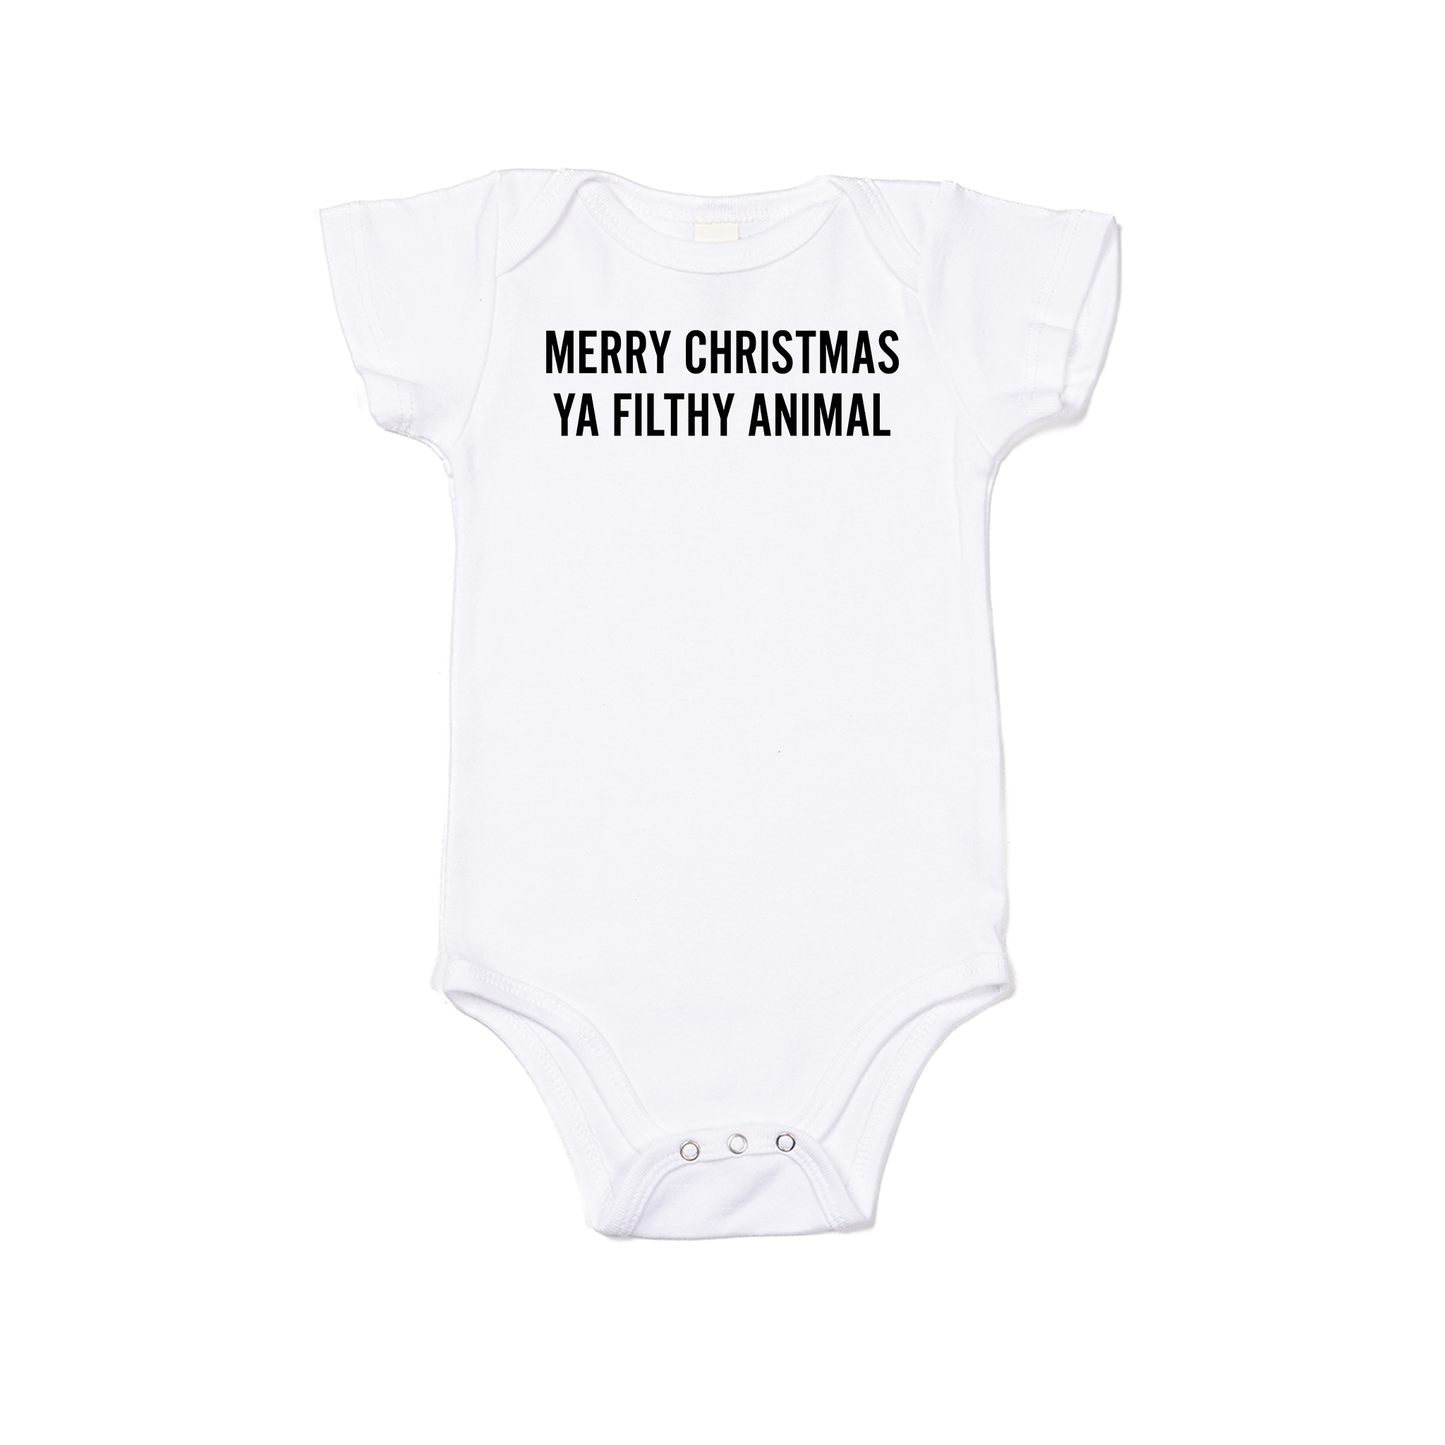 Merry Christmas Ya Filthy Animal  (Version 1, Black) - Bodysuit (White, Short Sleeve)